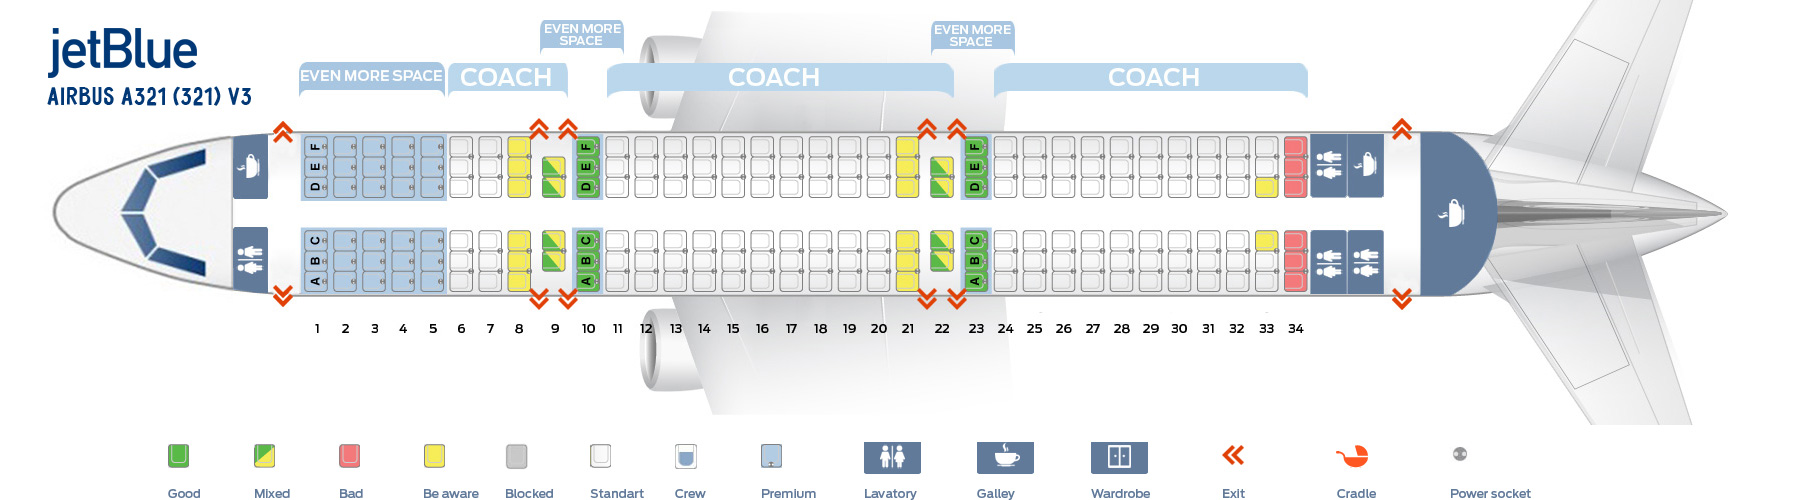 Jetblue A320 Seating Chart